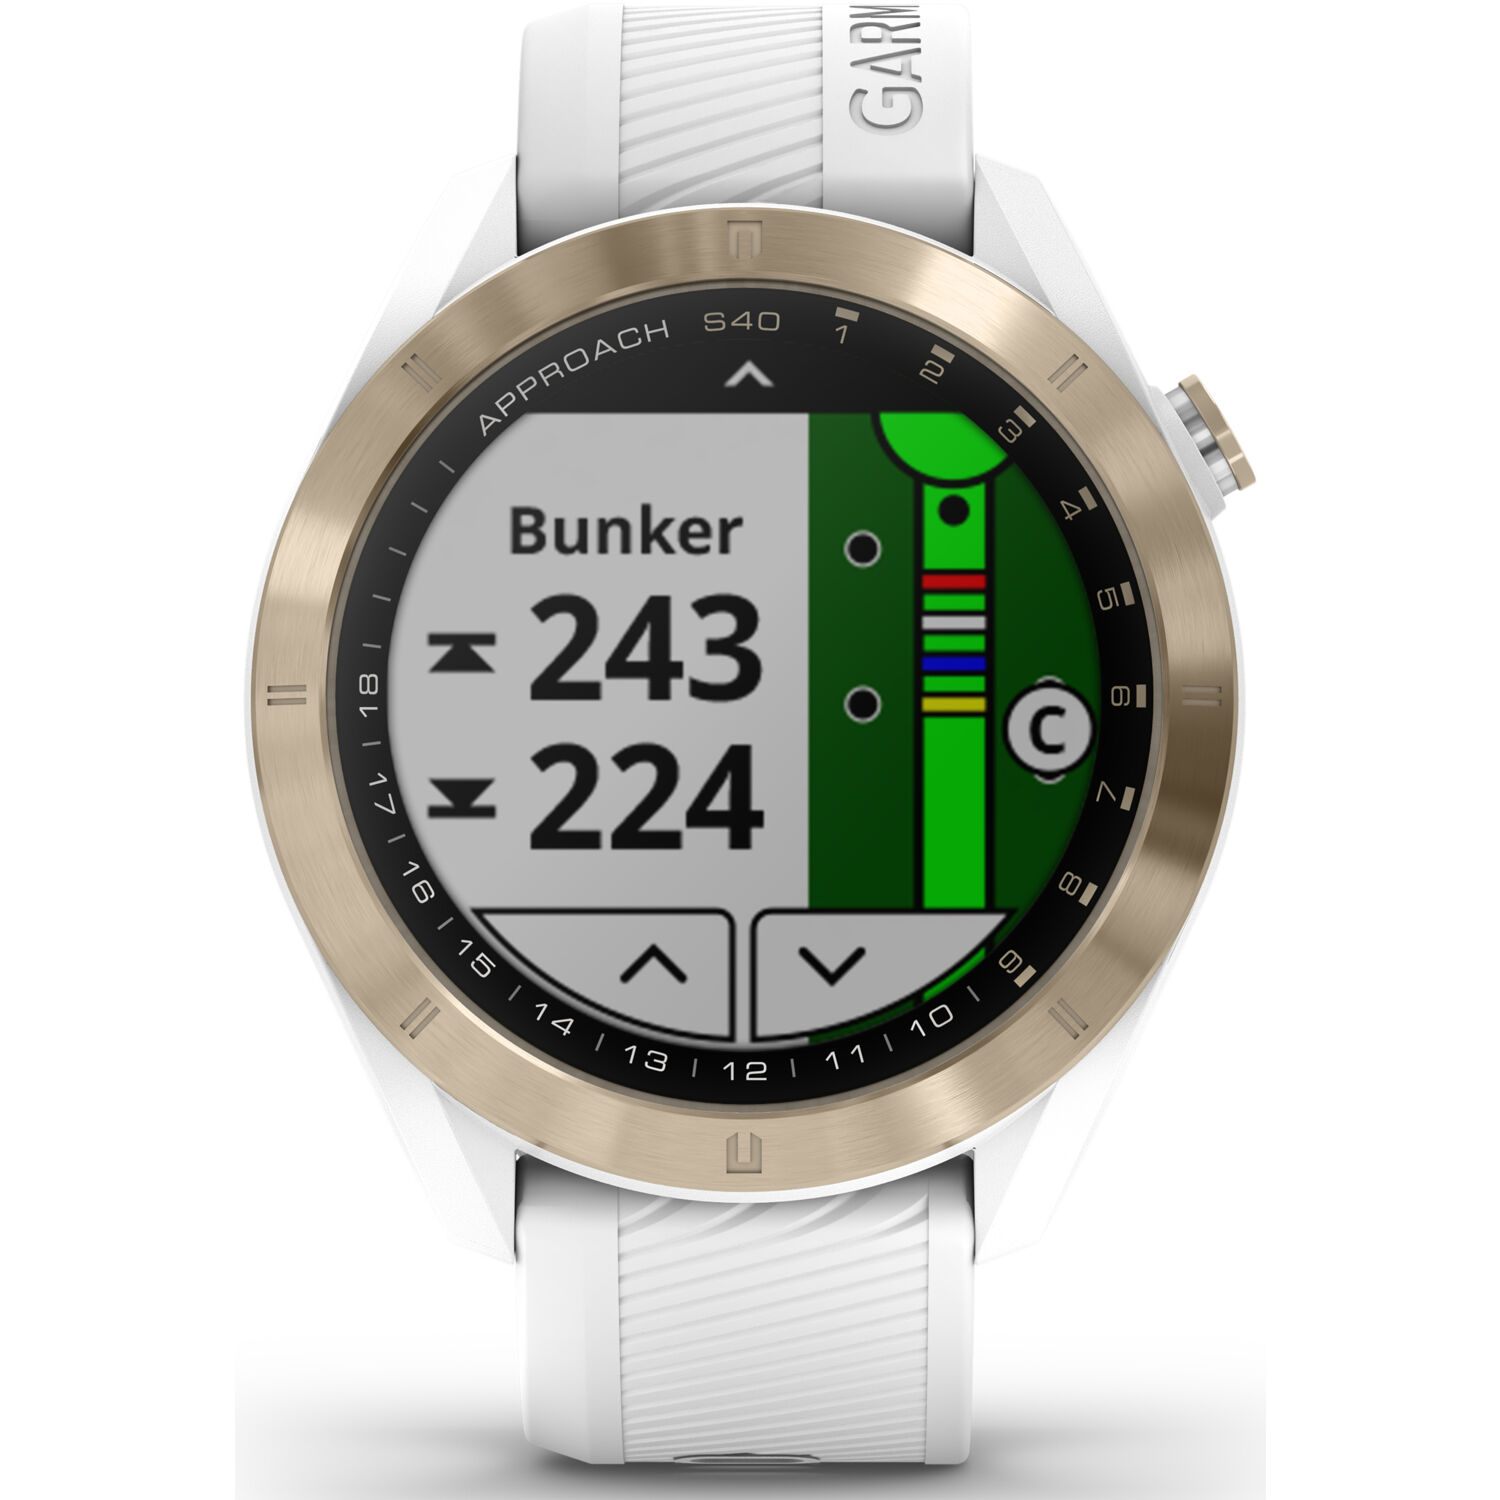 Garmin Approach S40 GPS Golf Smartwatch in White - image 1 of 7